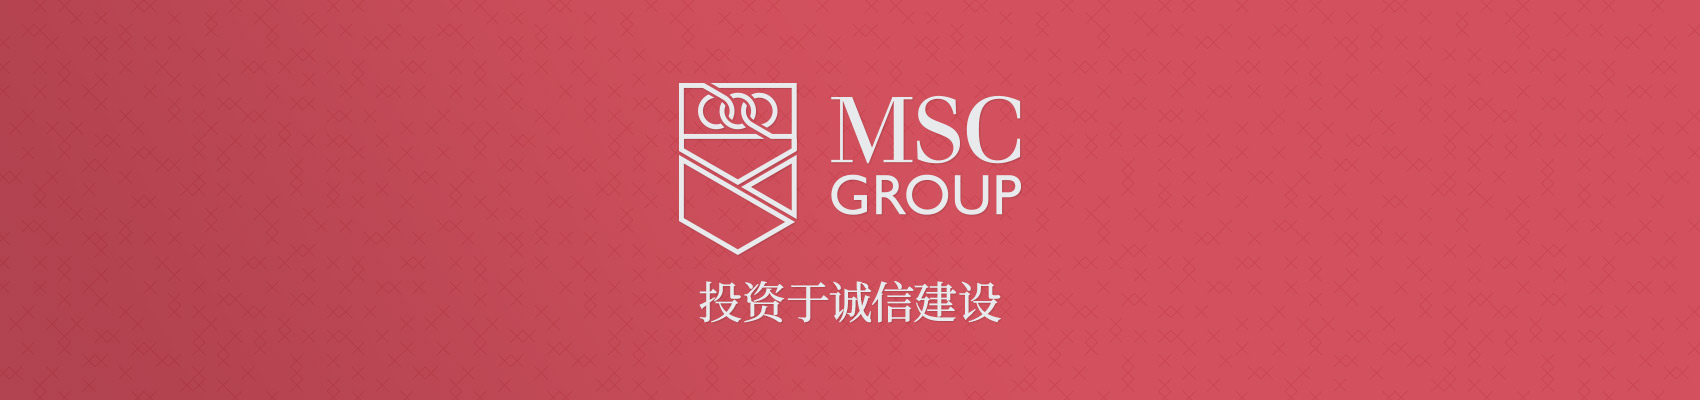 MSC-Logo-redpanel-Chinese